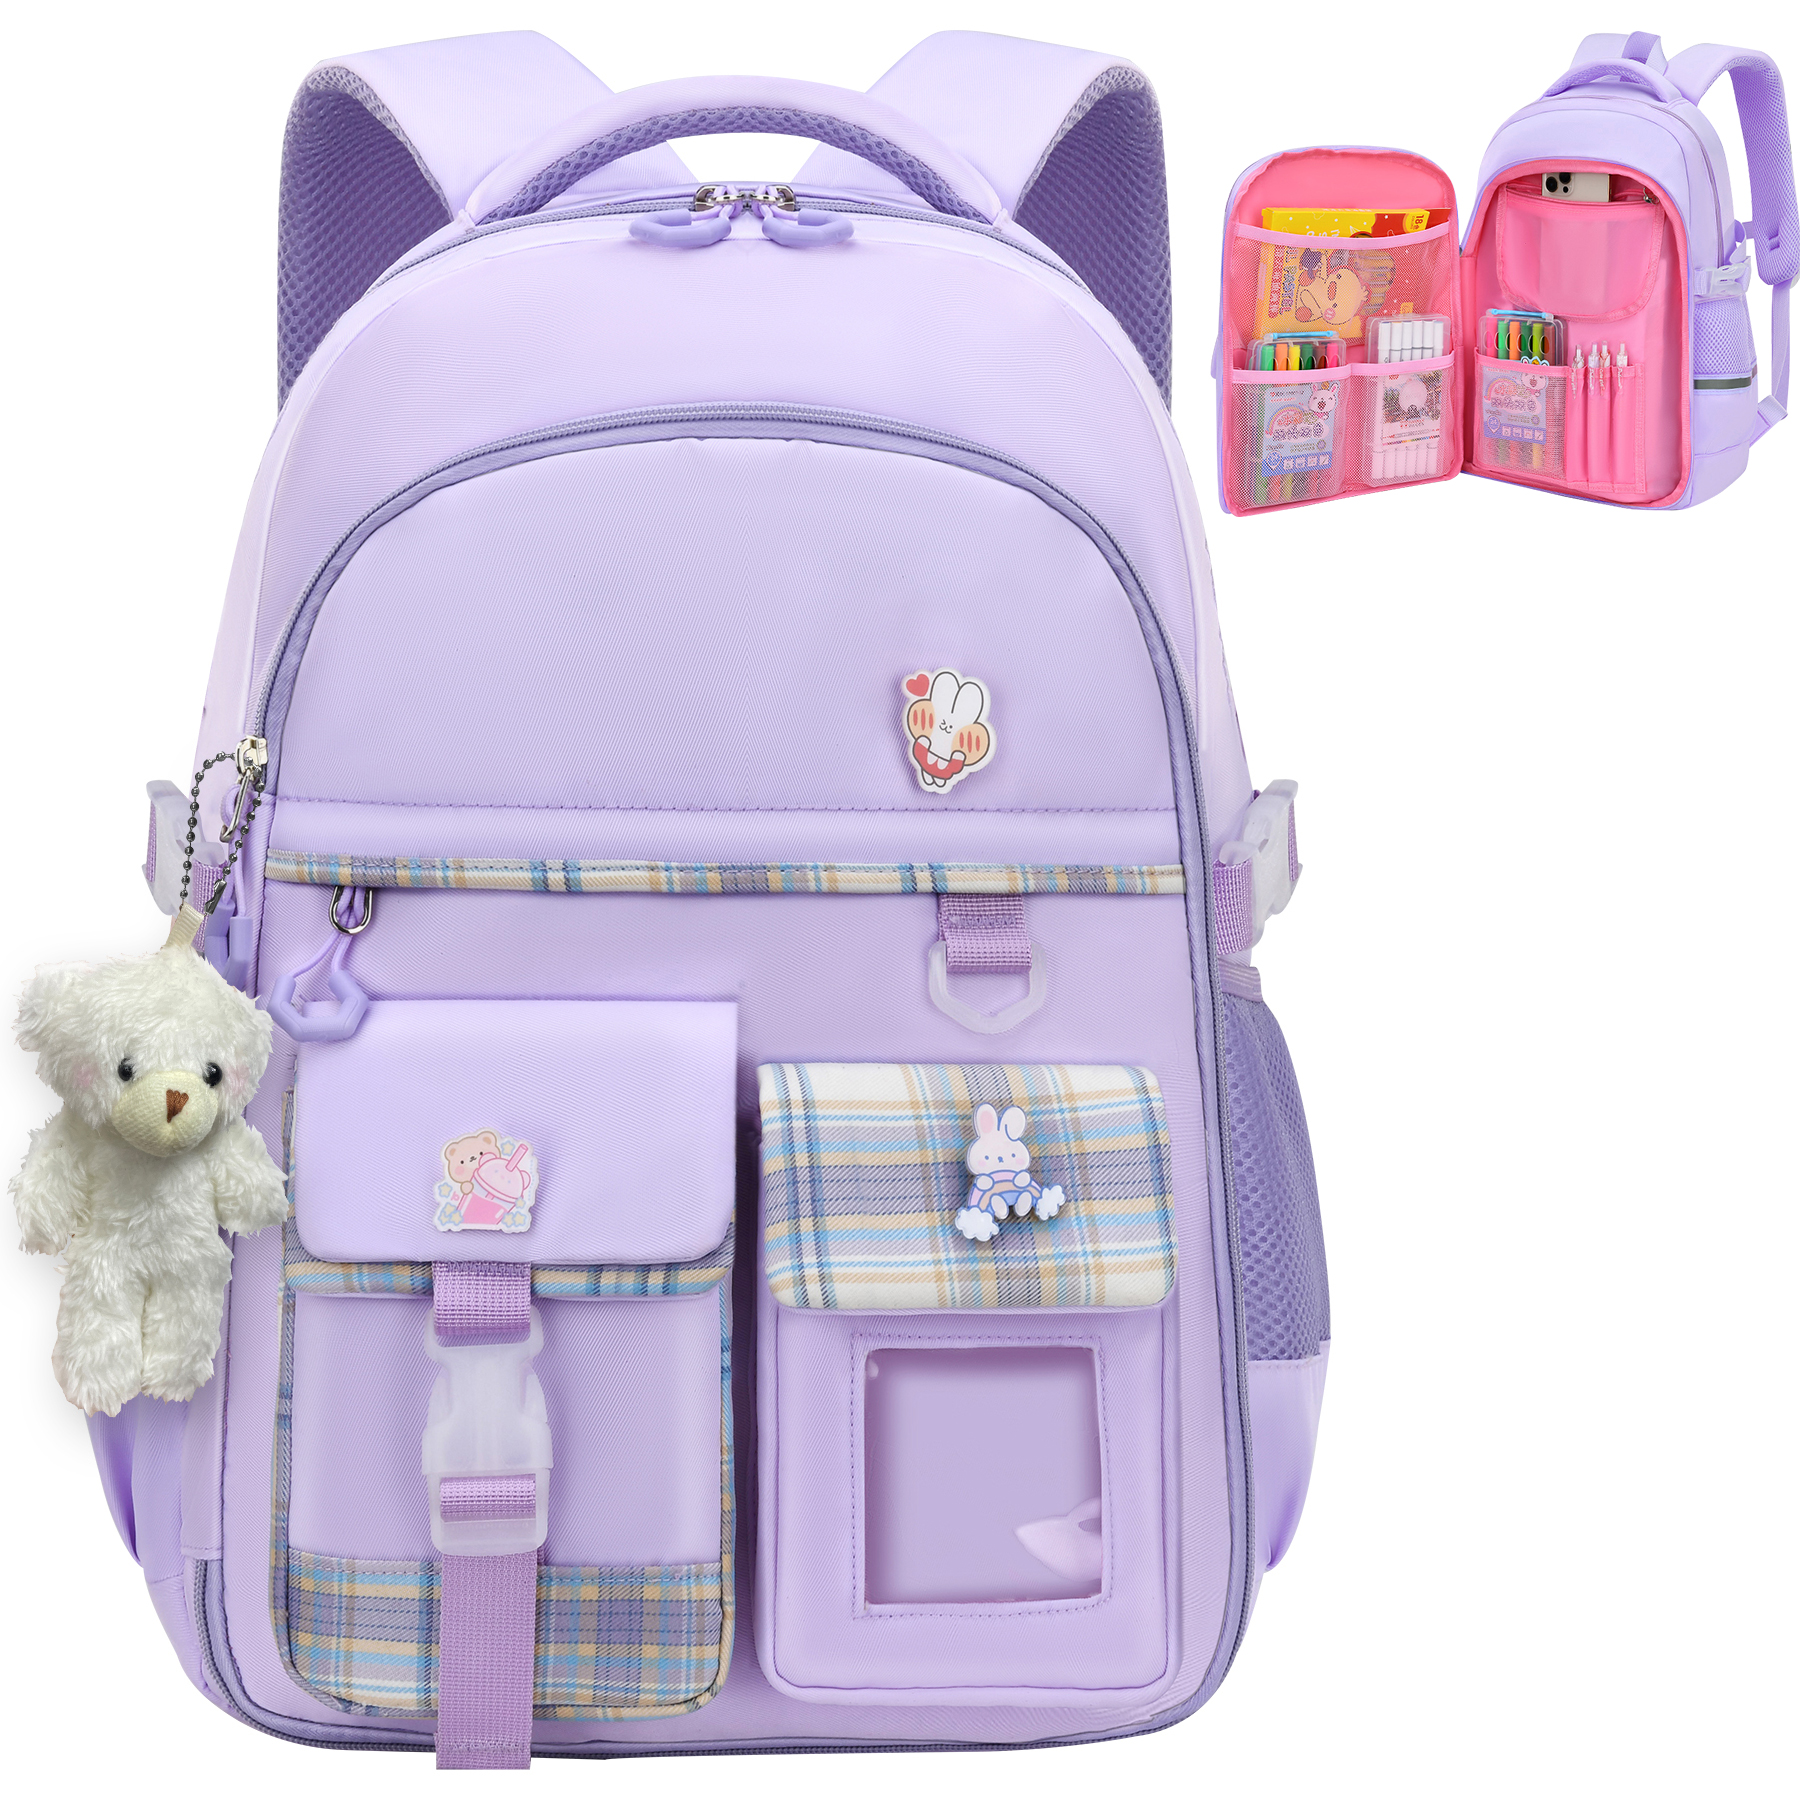 Derstuewe Girls School Backpack with cute doll pendants, Multifunction ...